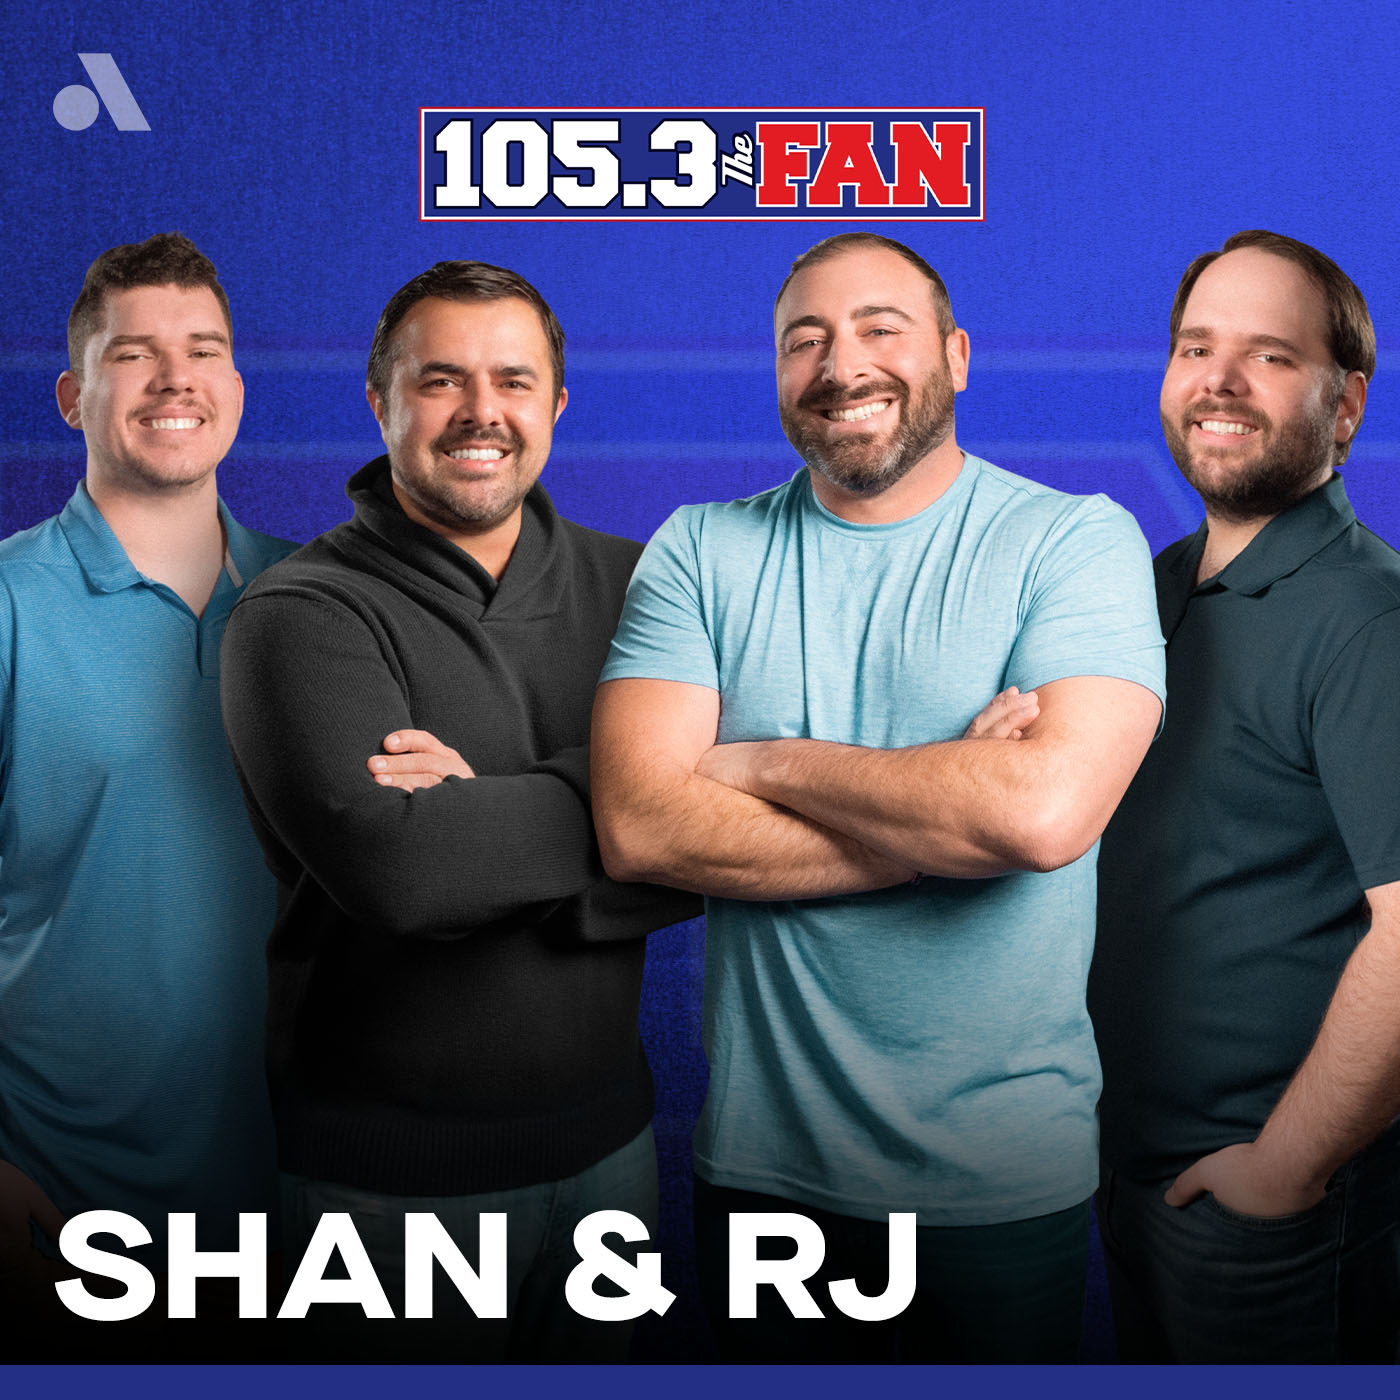 Josh Donaldson details the 2016 Rangers/Blue Jays brawl